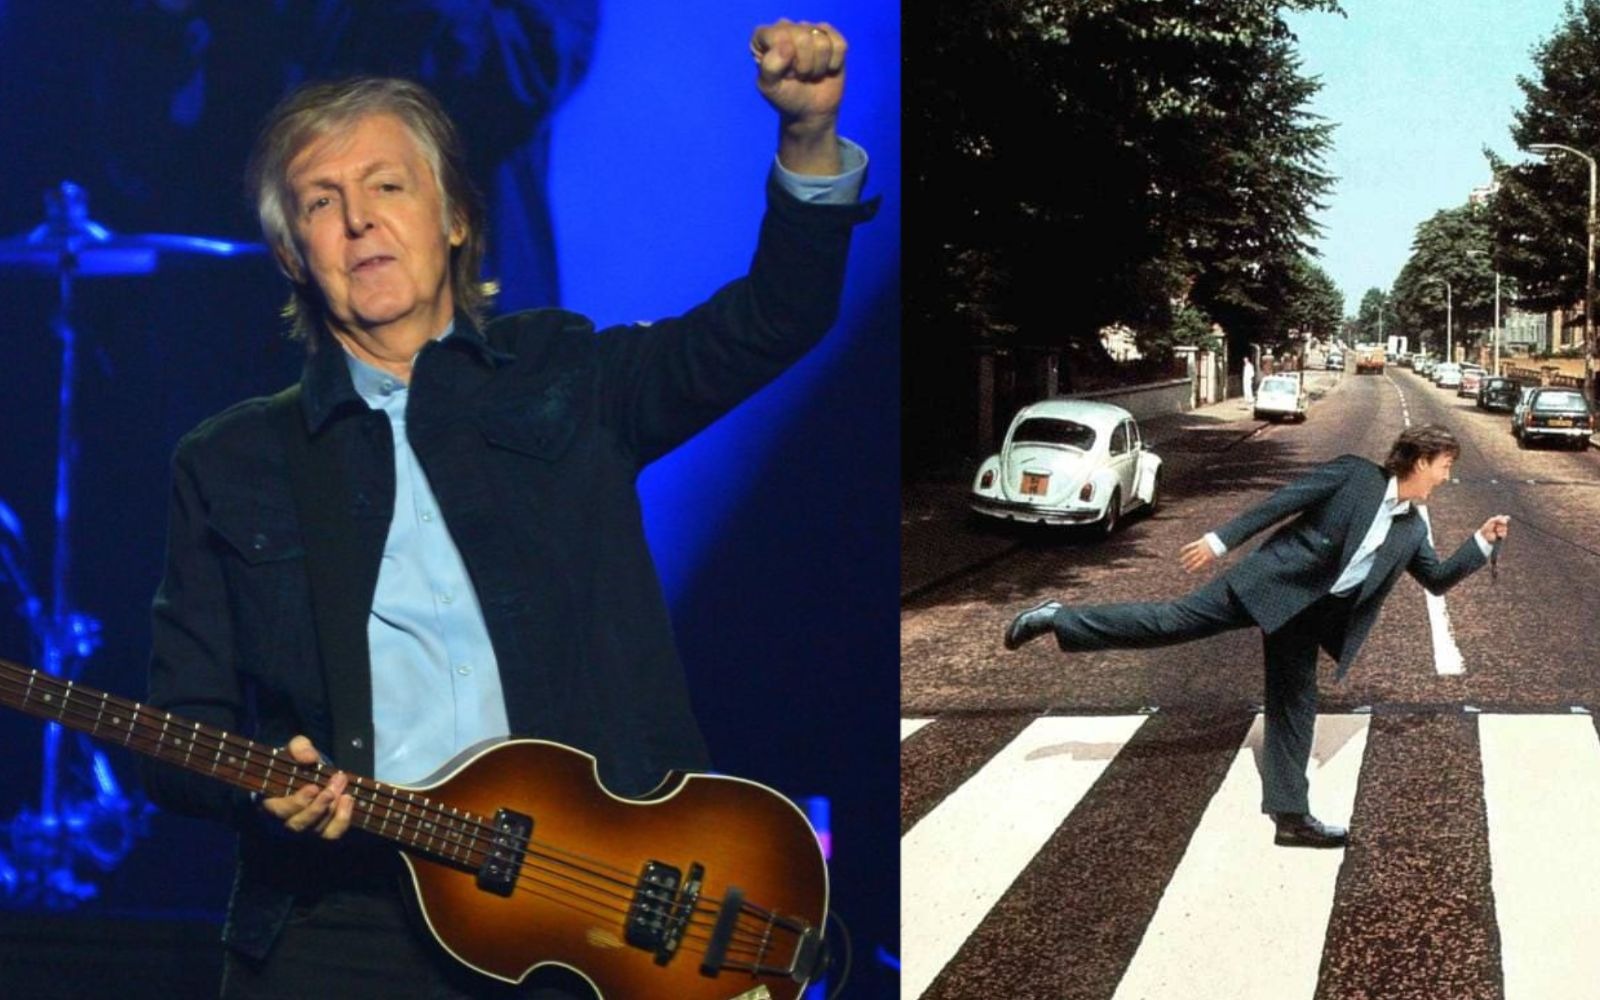 Paul McCartney Alive